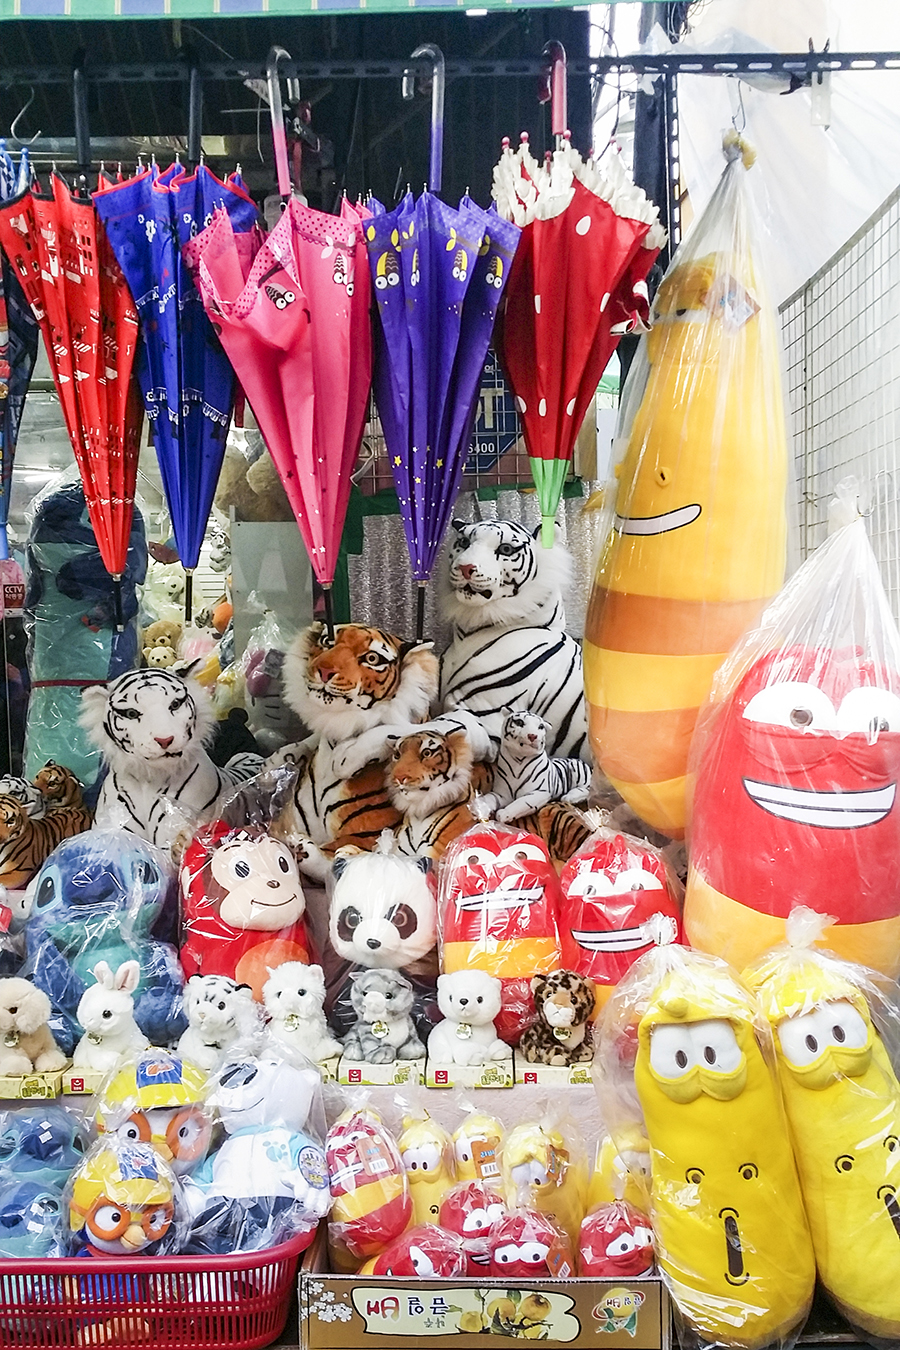 Toys and plushies on display in Dongdaemun market, Seoul, South Korea.